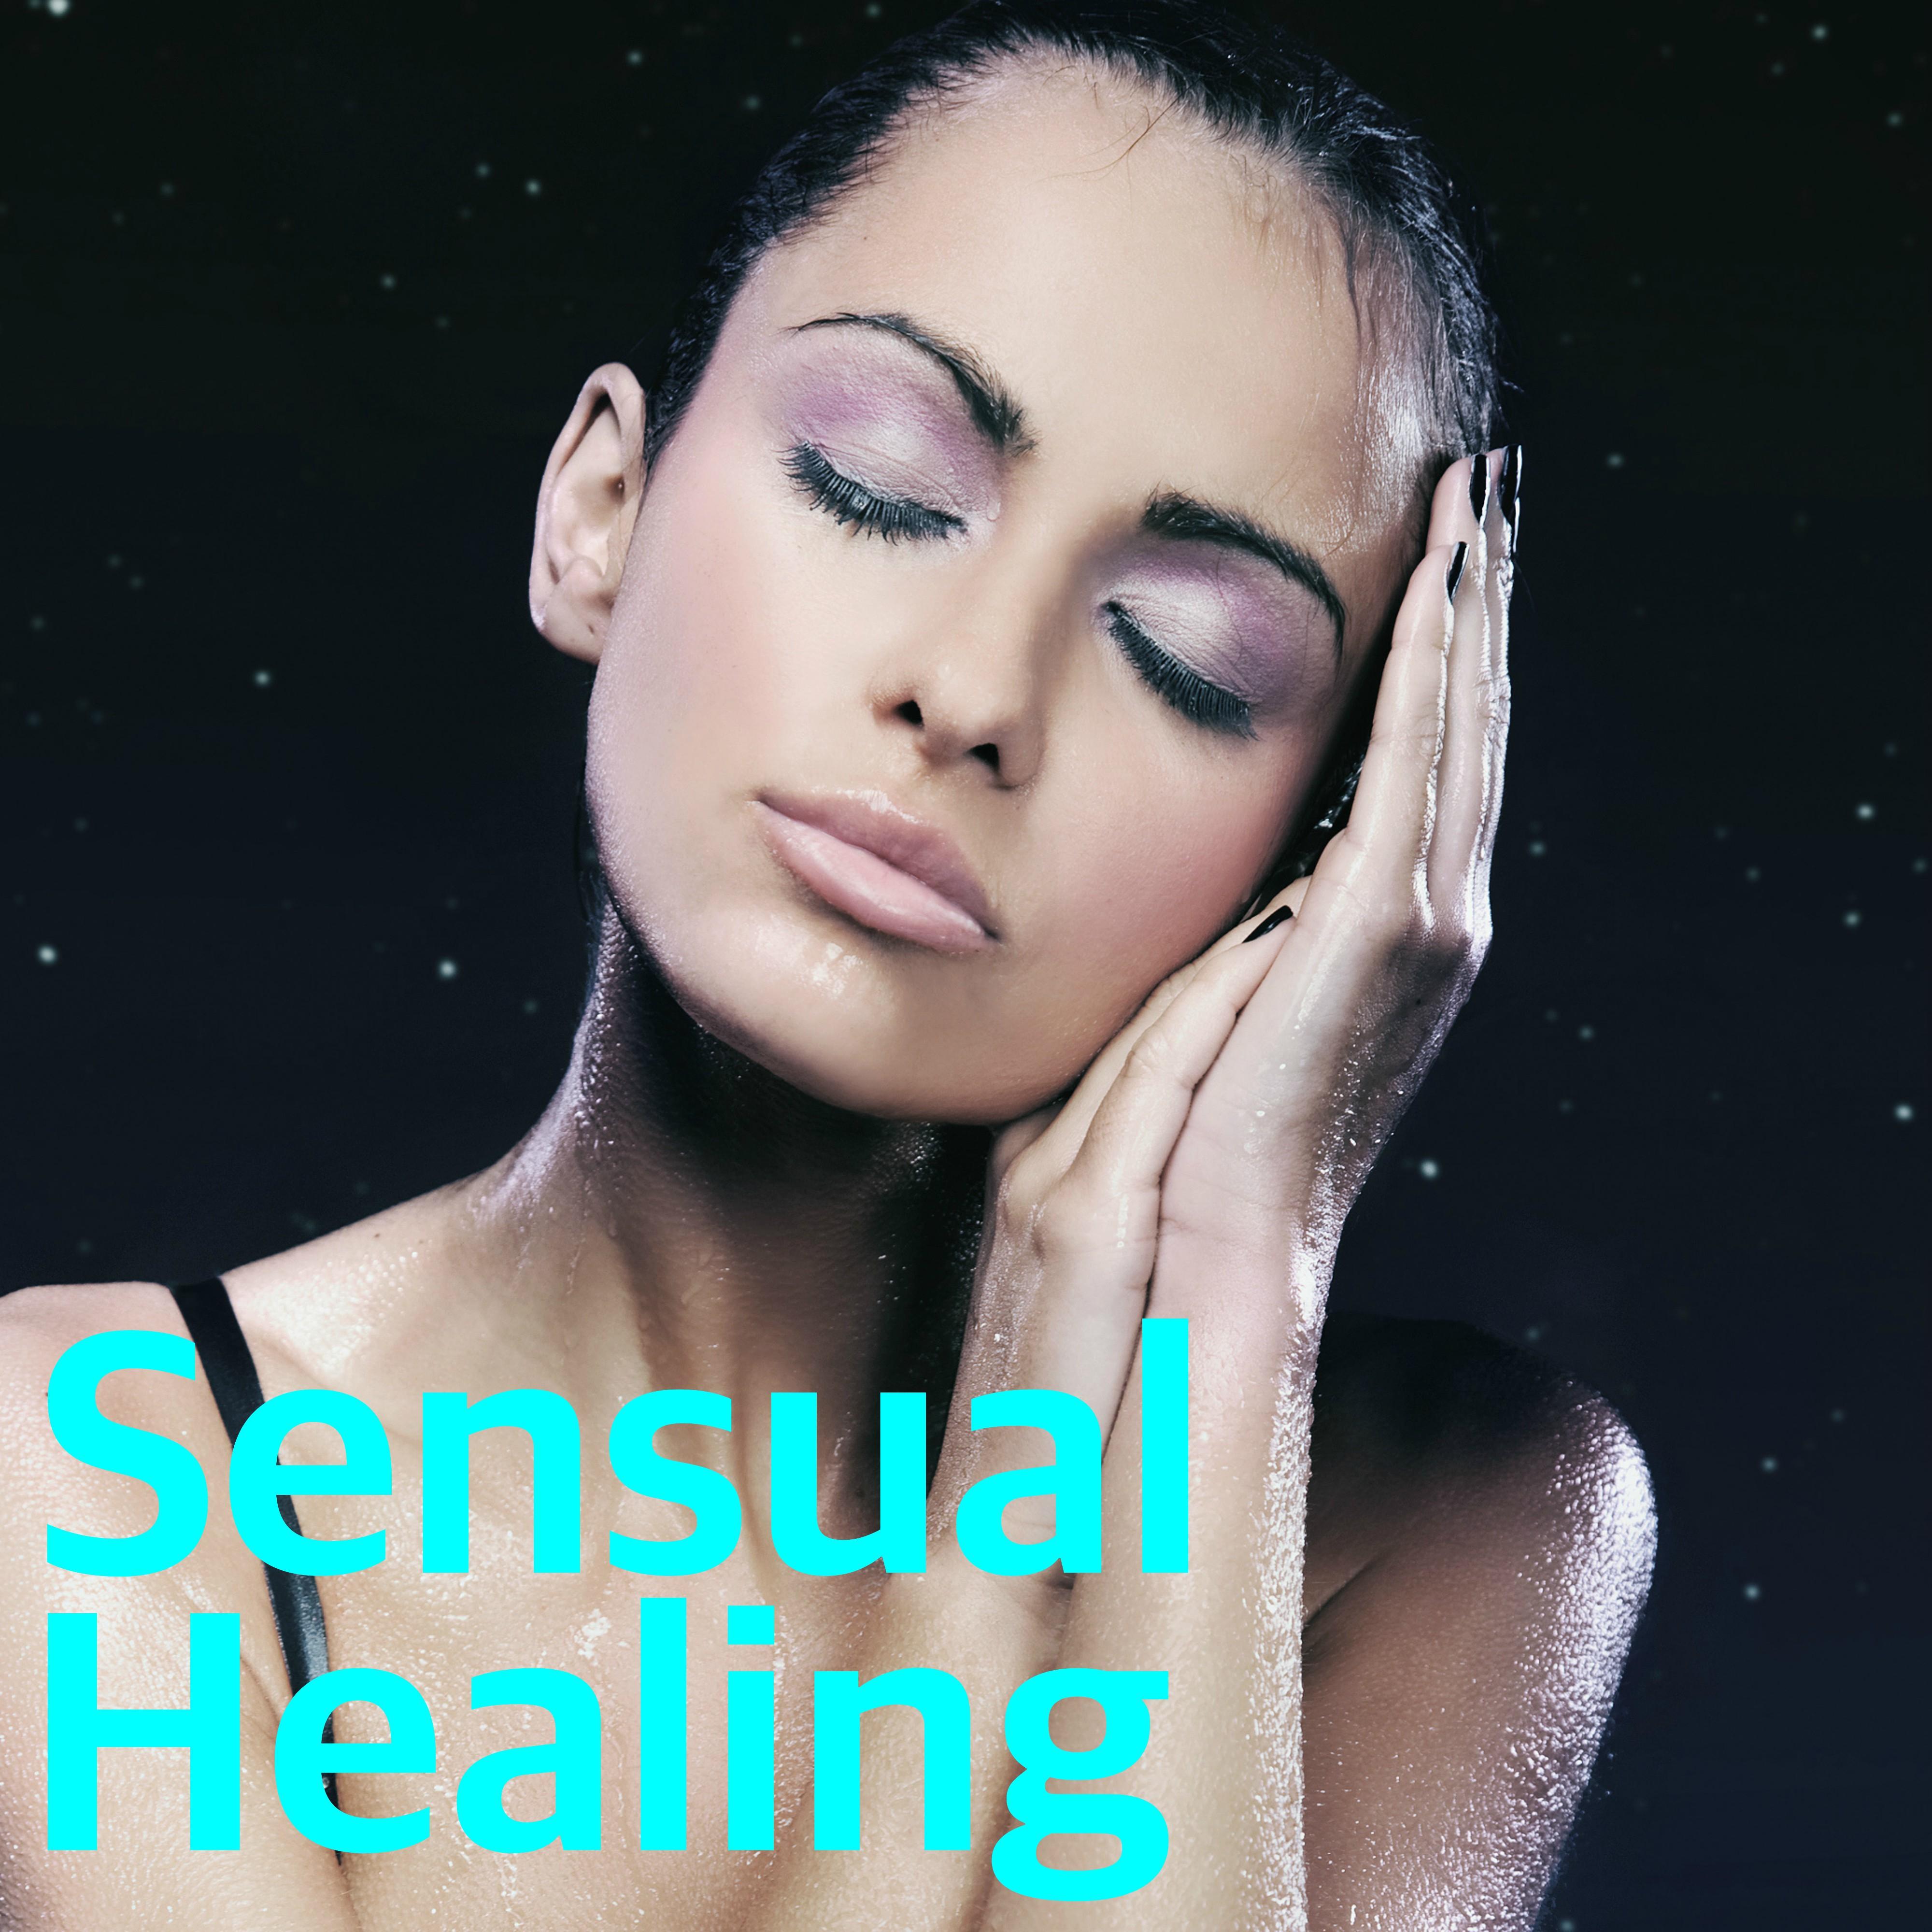 Sexual Stimulation - Sensual Music for Feeling Good